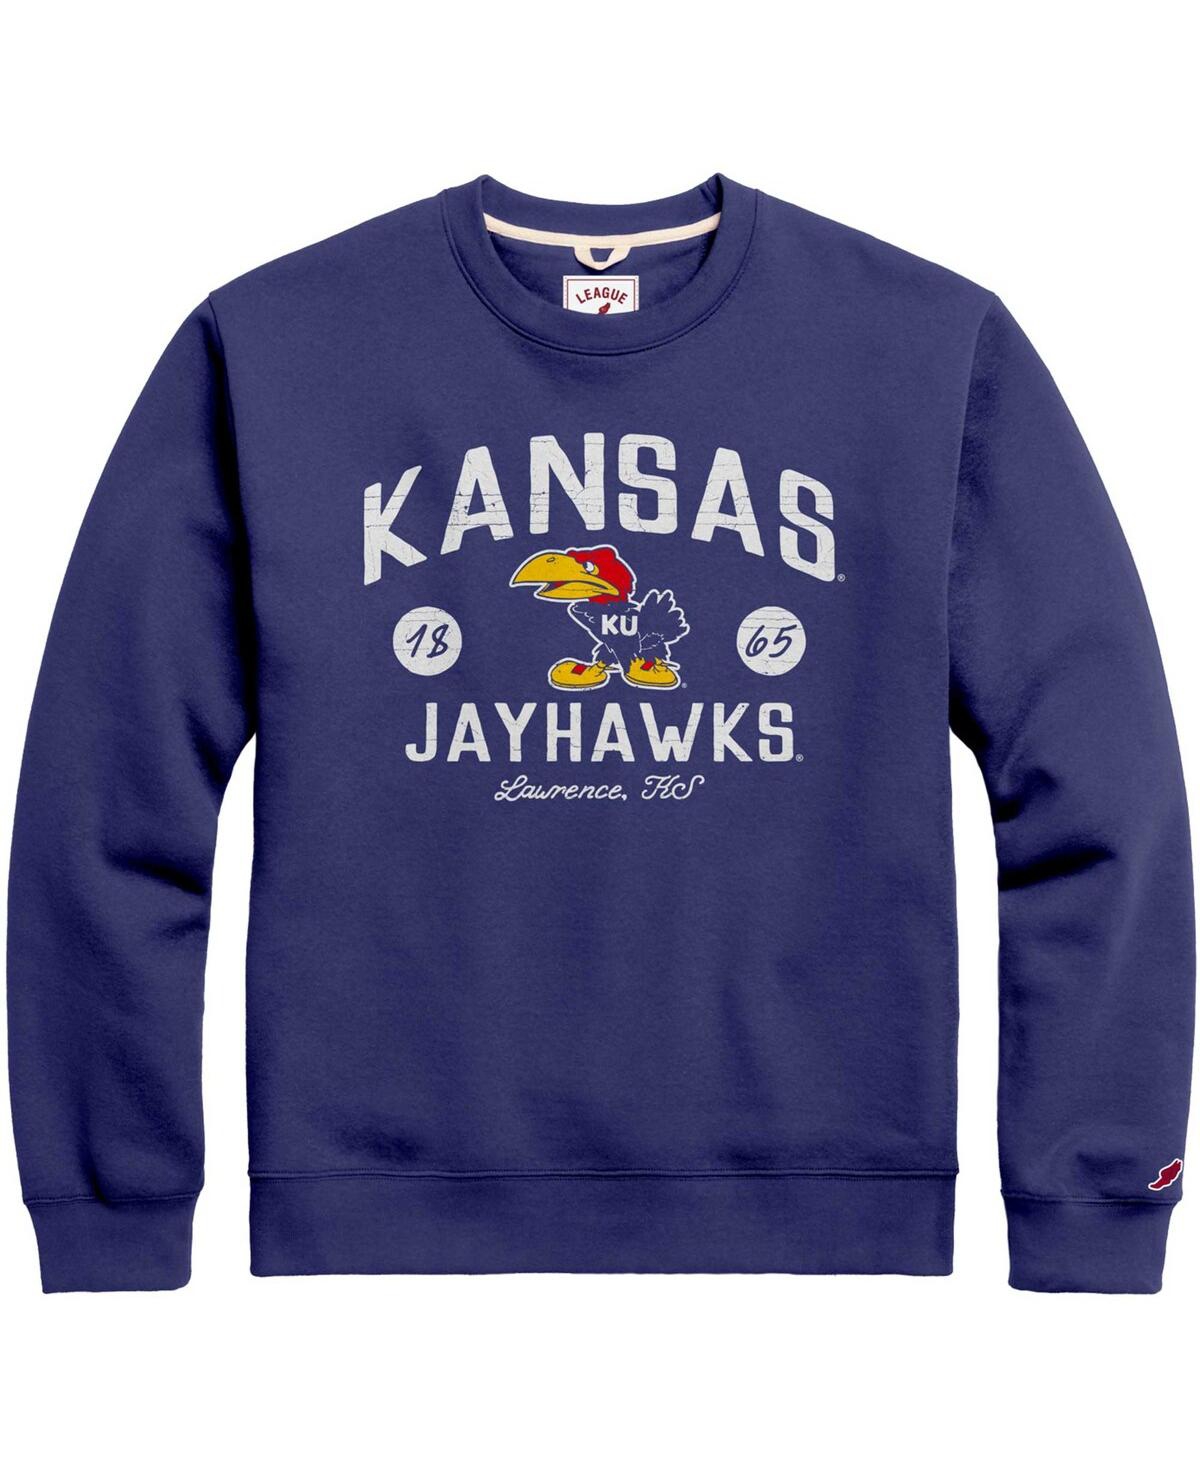 League Collegiate Wear Men's  Royal Distressed Kansas Jayhawks Bendy Arch Essential Pullover Sweatshi